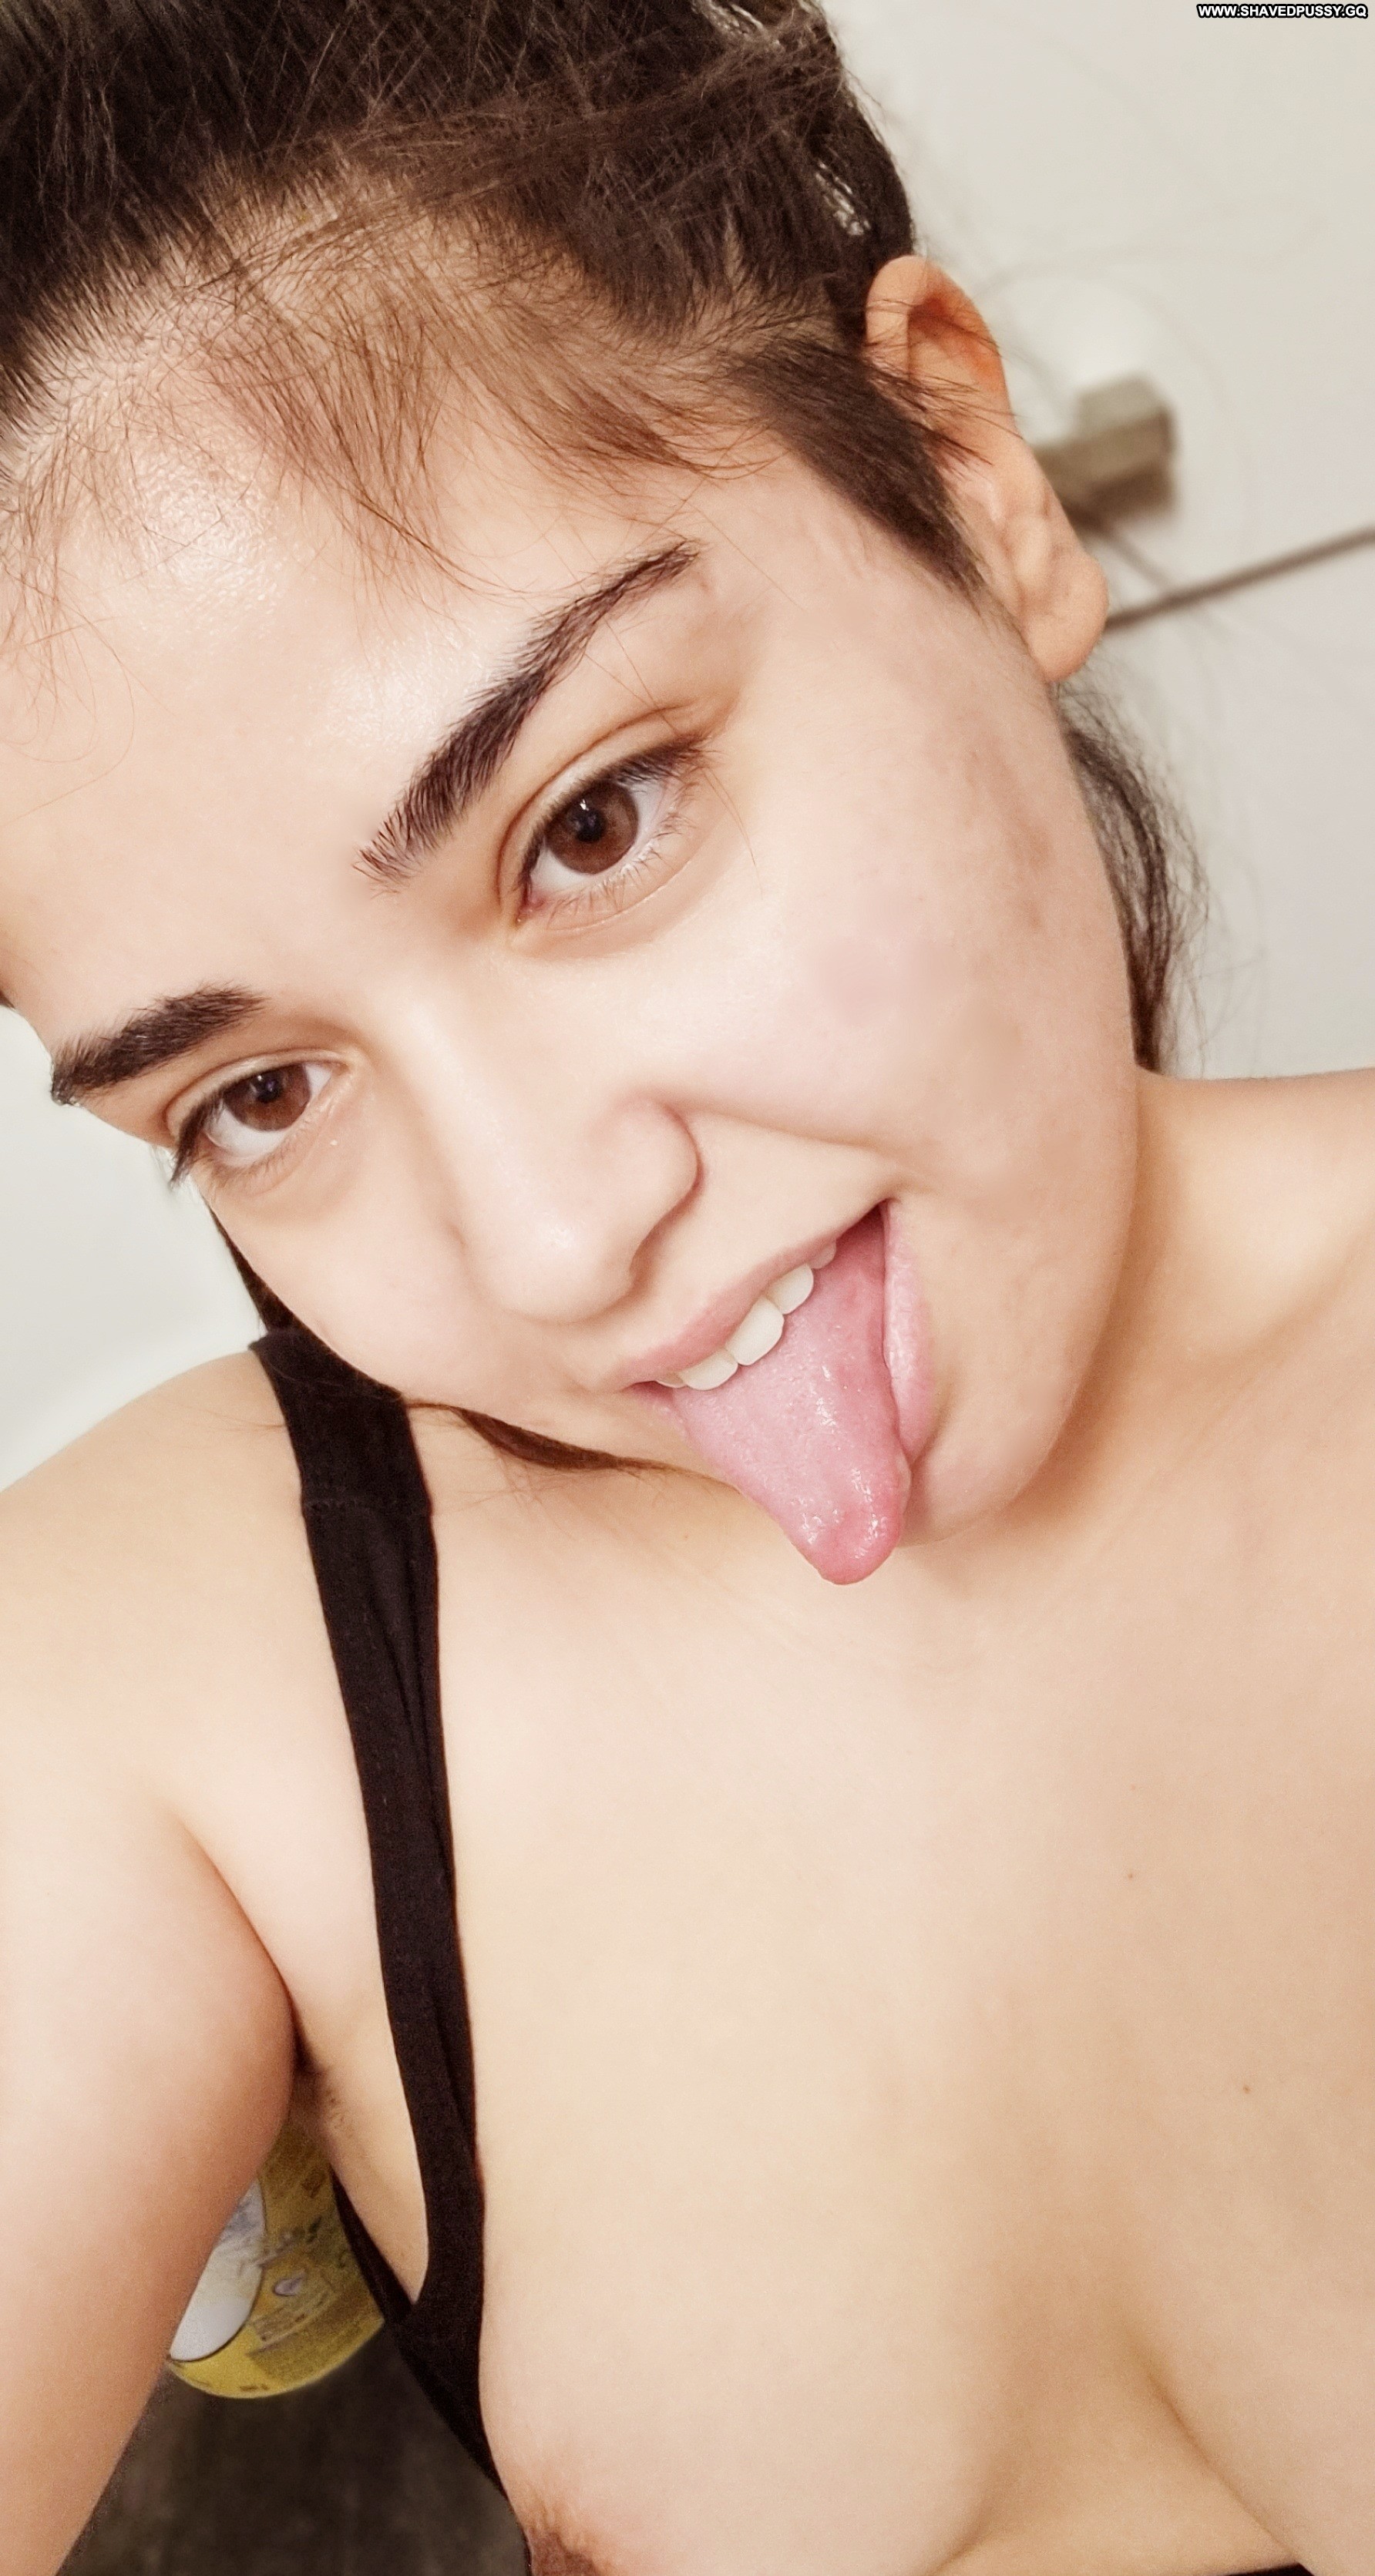 amateur latina shaved pussy Porn Pics Hd